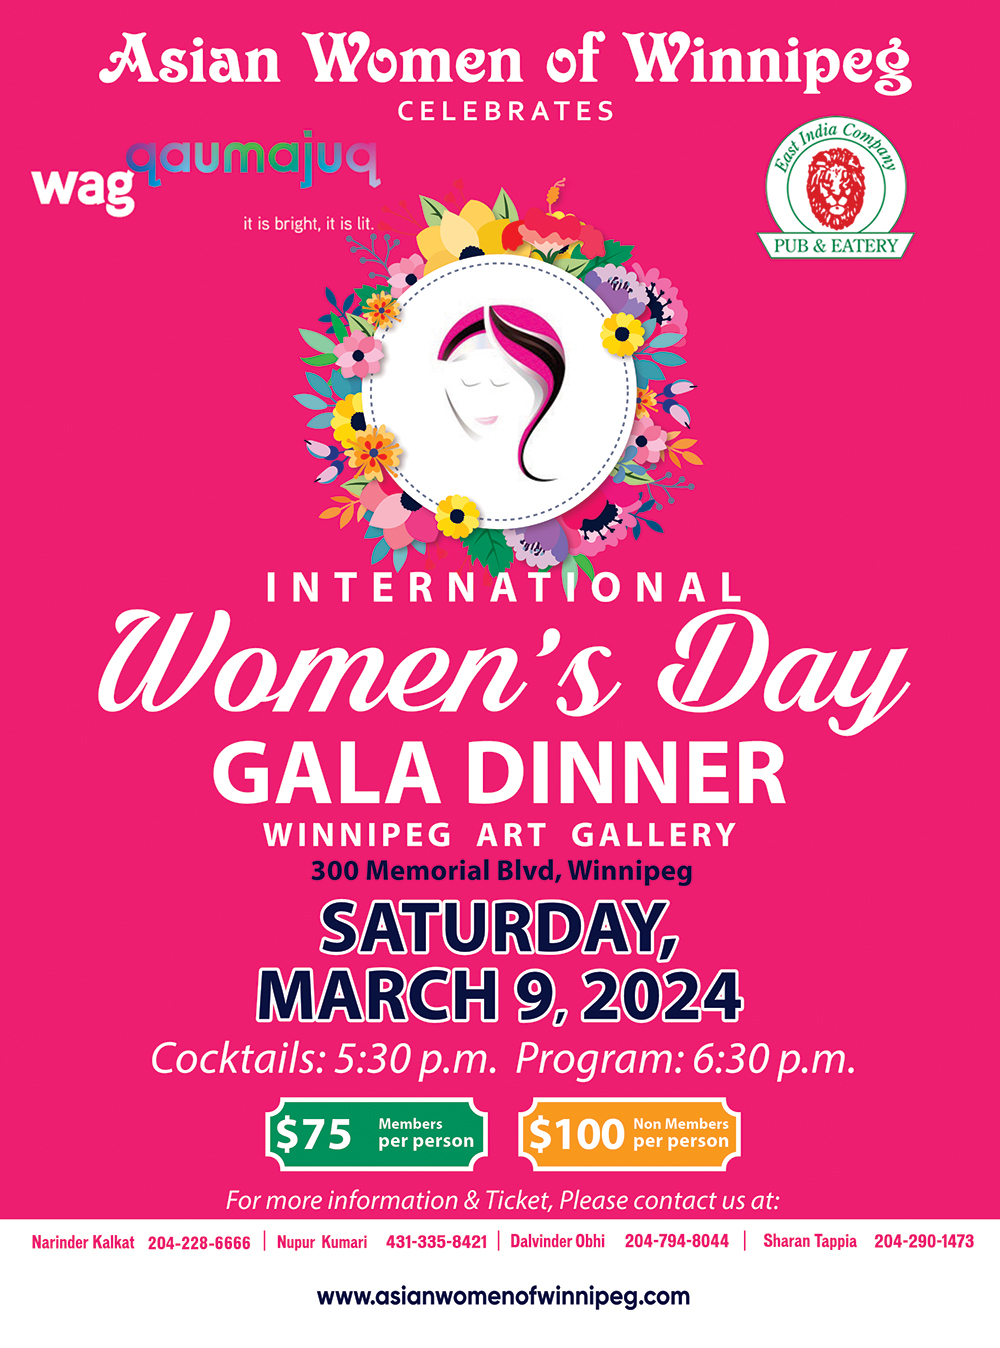 Asian Women of Winnipeg - International Women's Day GALA DINNER